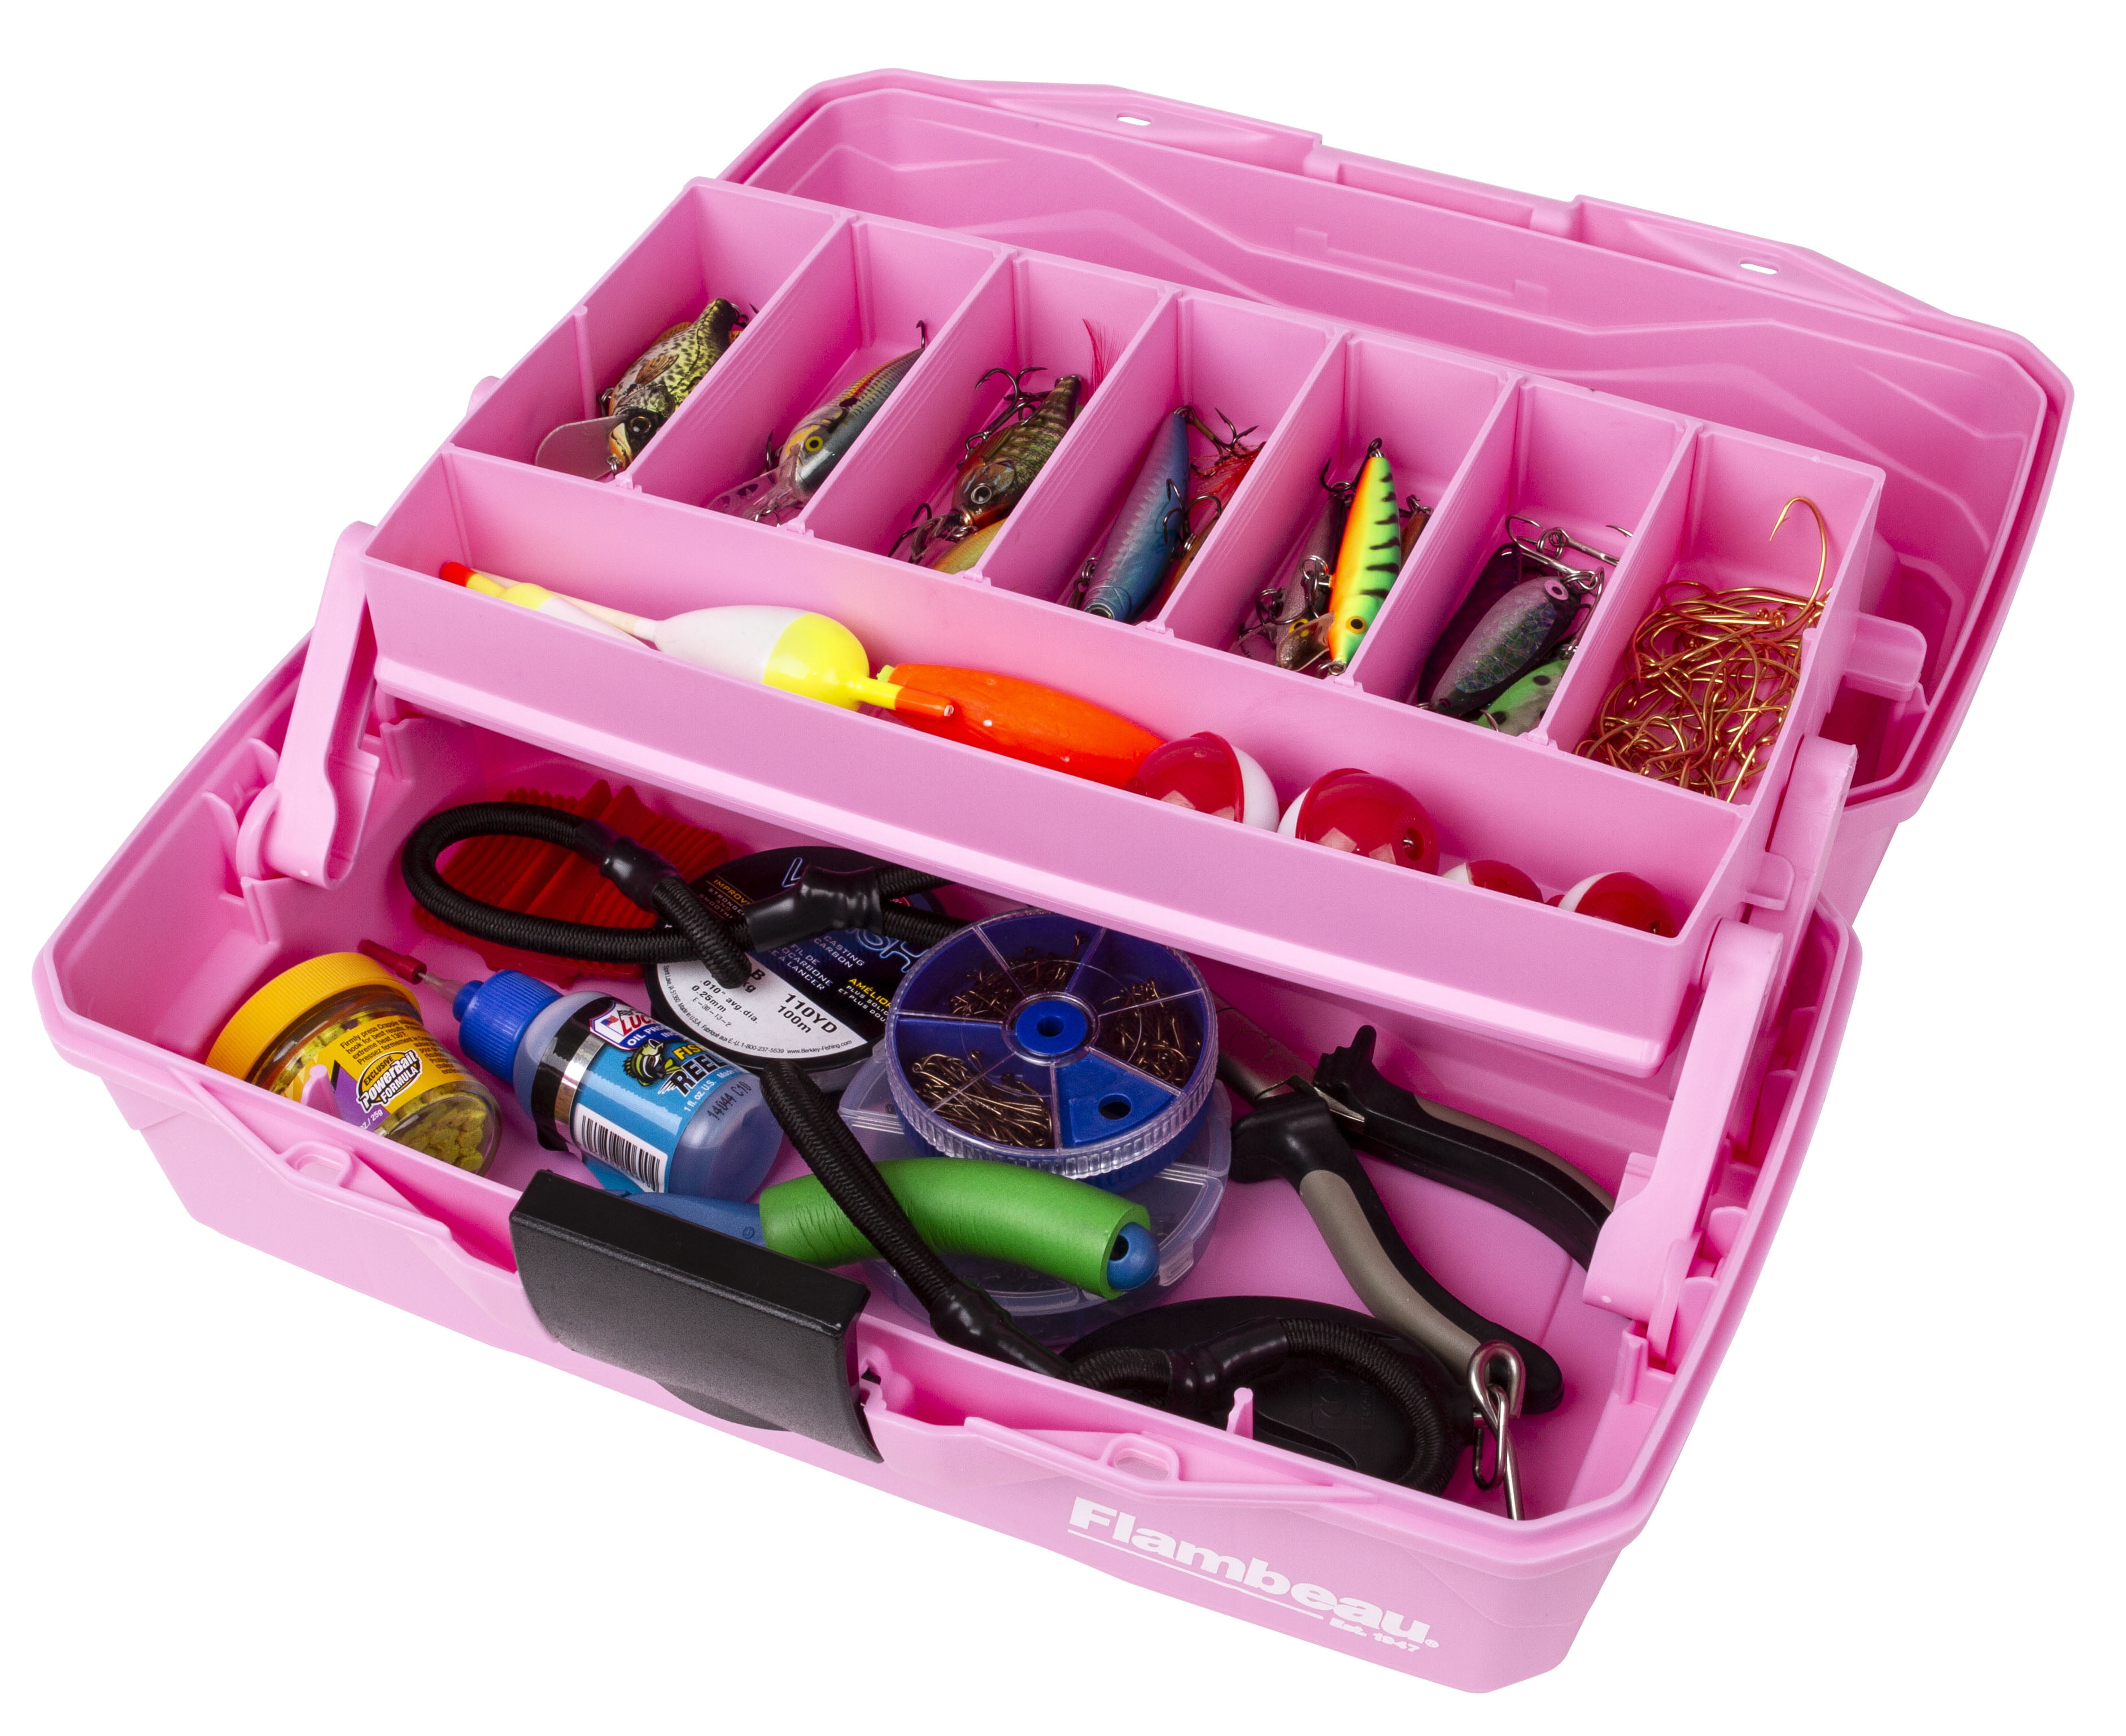 Flambeau 17-in Purple Plastic Lockable Tool Box at